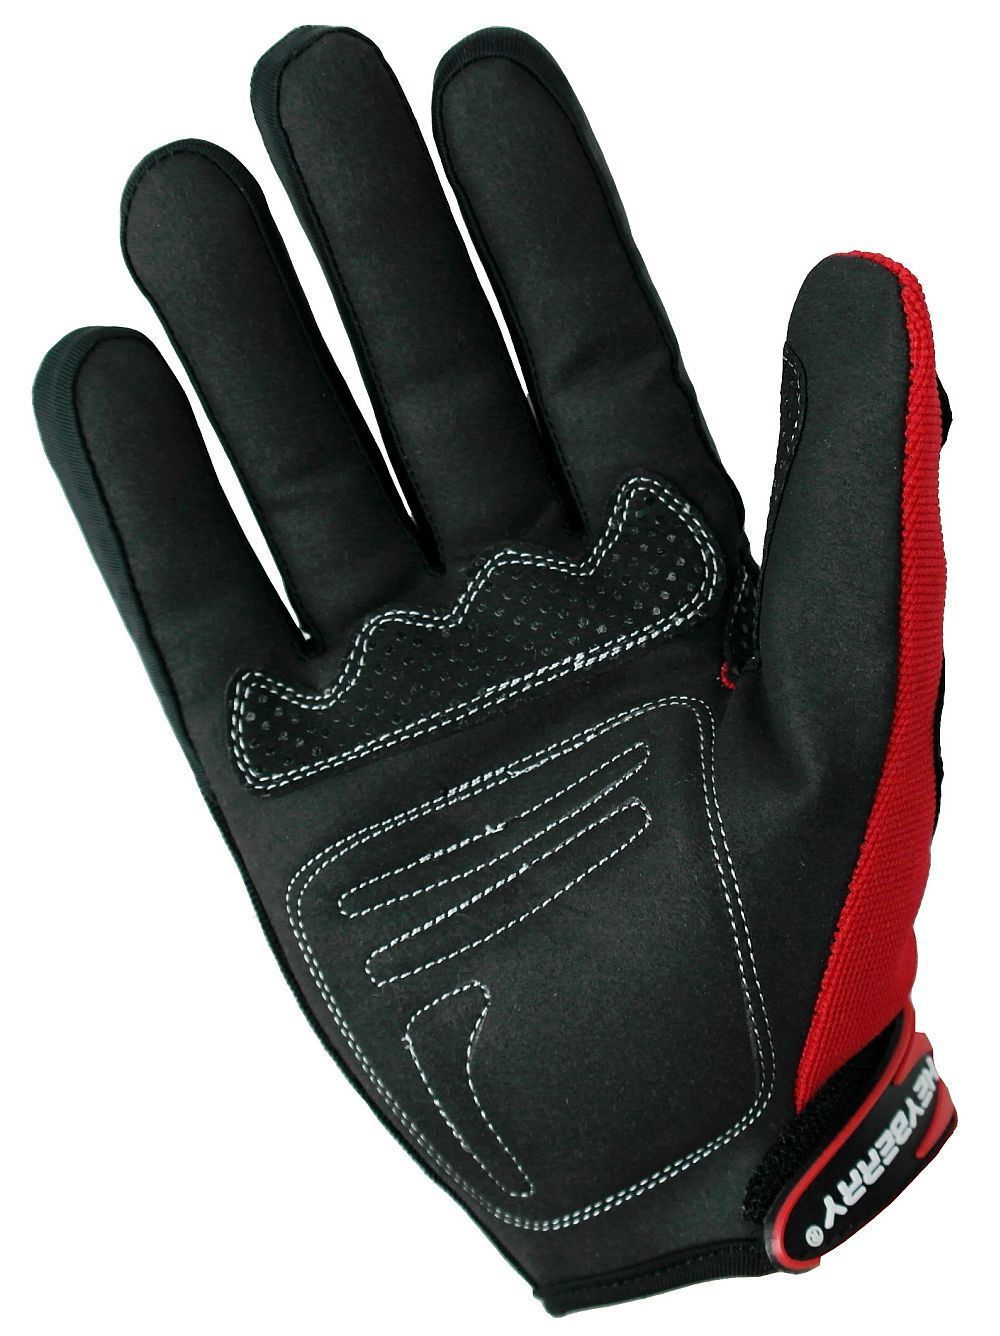 Heyberry Motocross MTB MX Handschuhe schwarz rot Gr. S - XXL